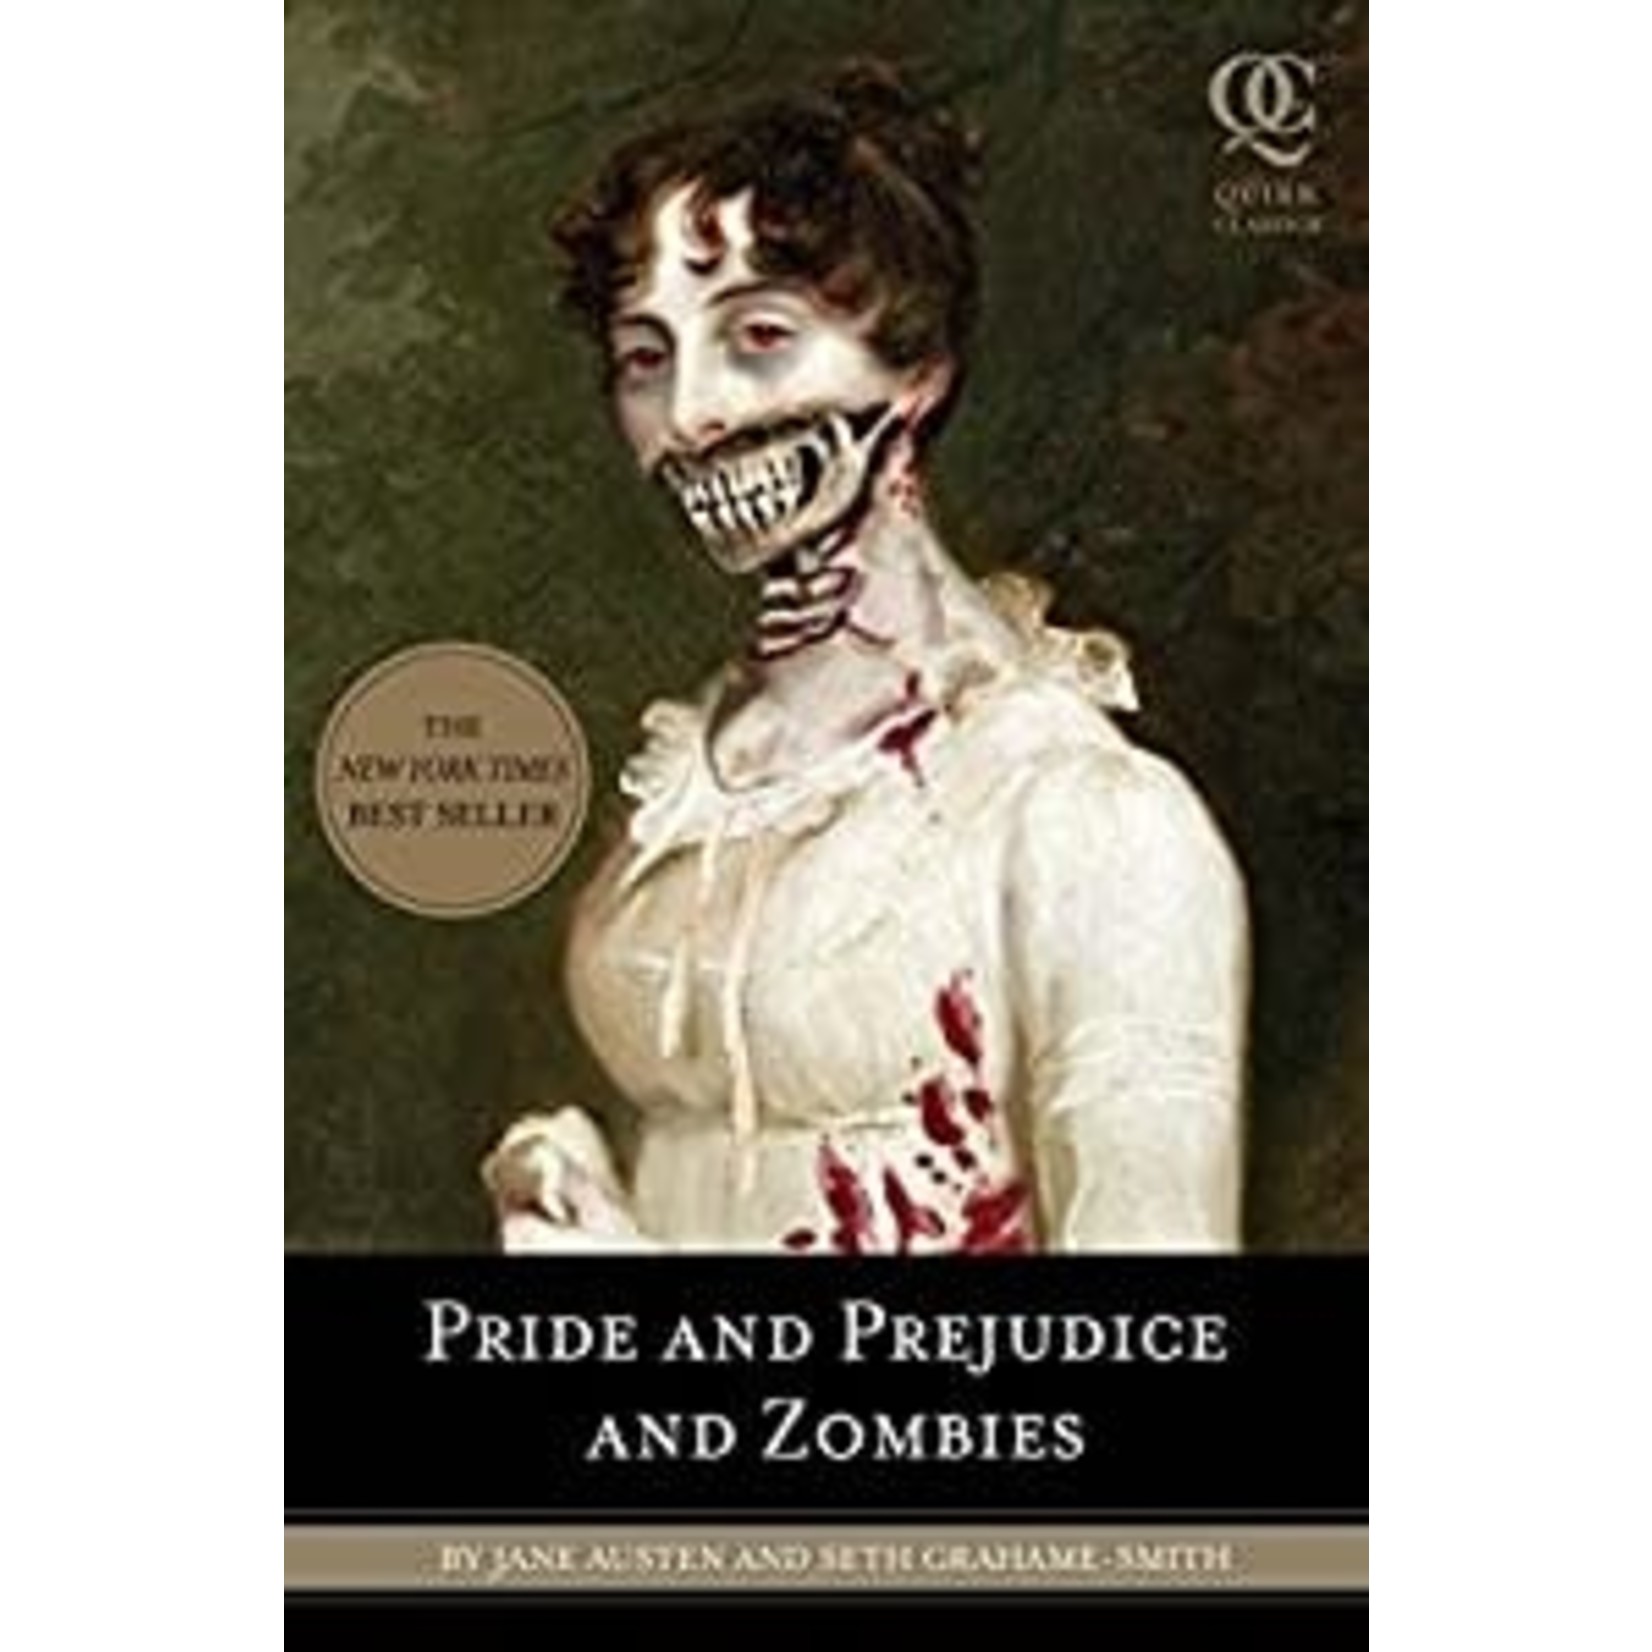 Austen, Jane Austen, Jane; Grahame-Smith, Seth (HO) - Pride and Prejudice and Zombies (TP)